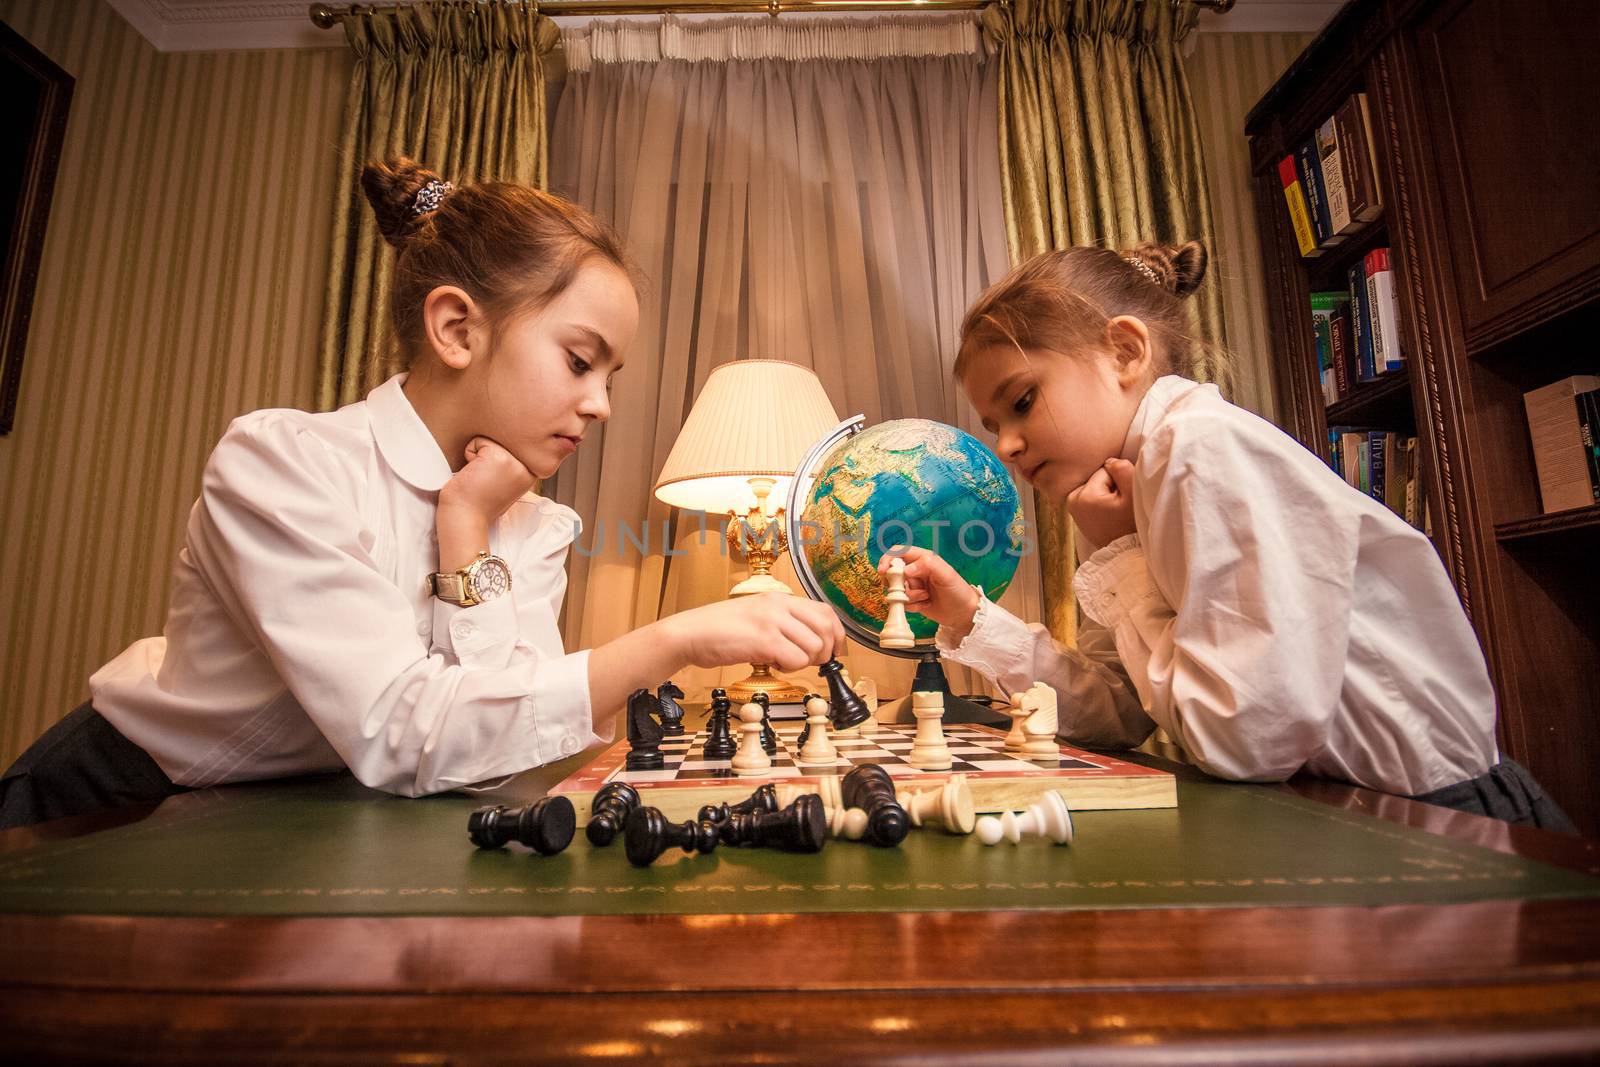  girls playing chess by Kryzhov